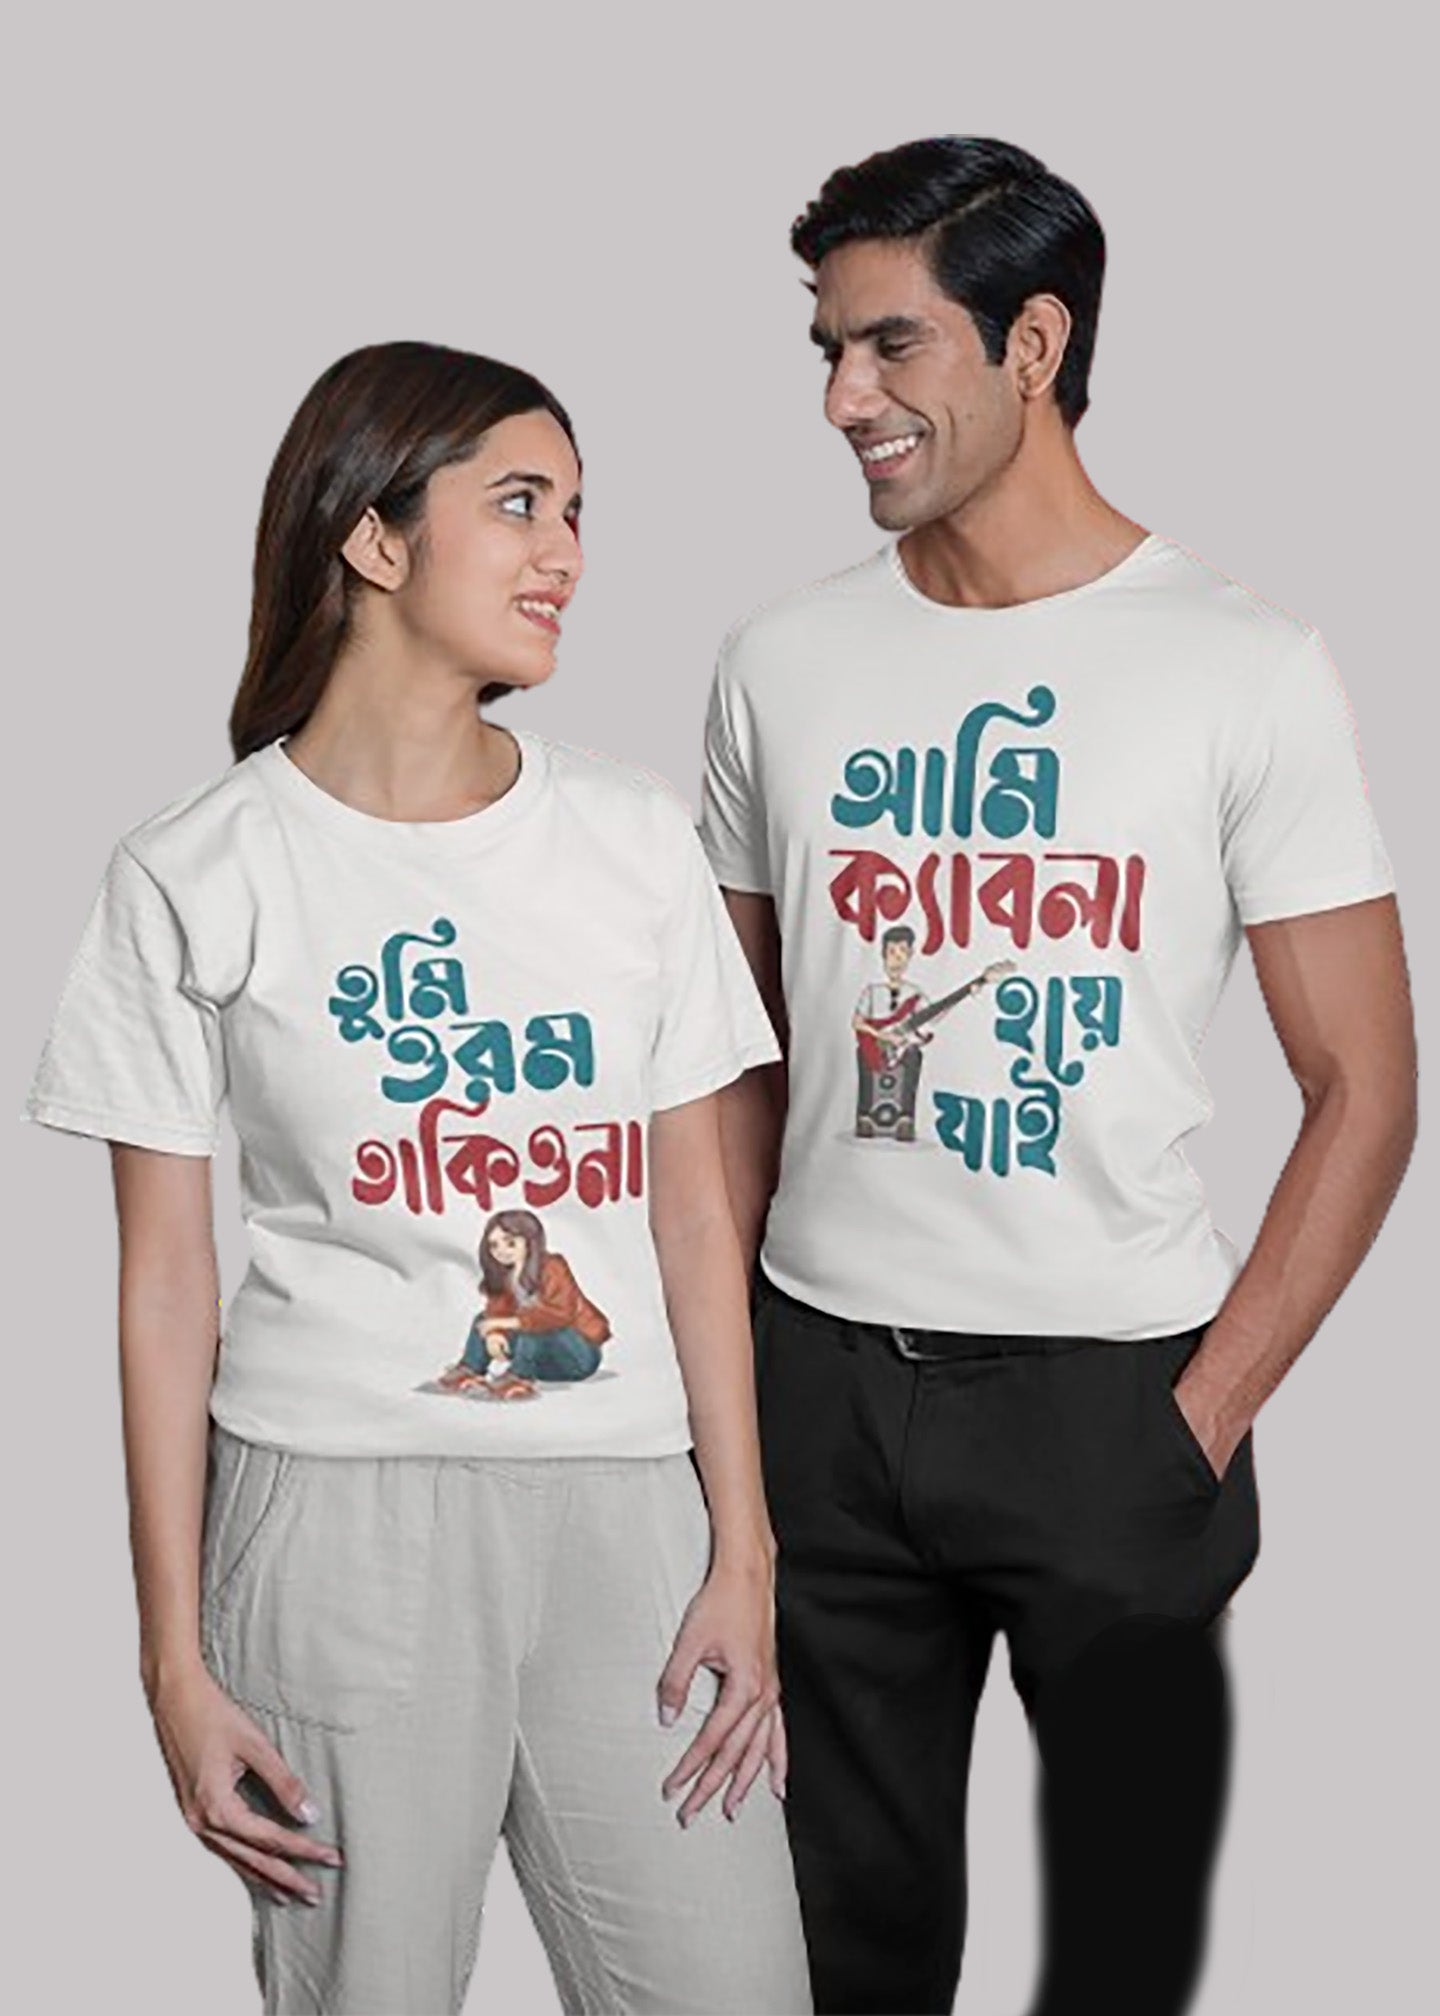 Ami kebla hoye jai bengali Printed Couple T-shirt